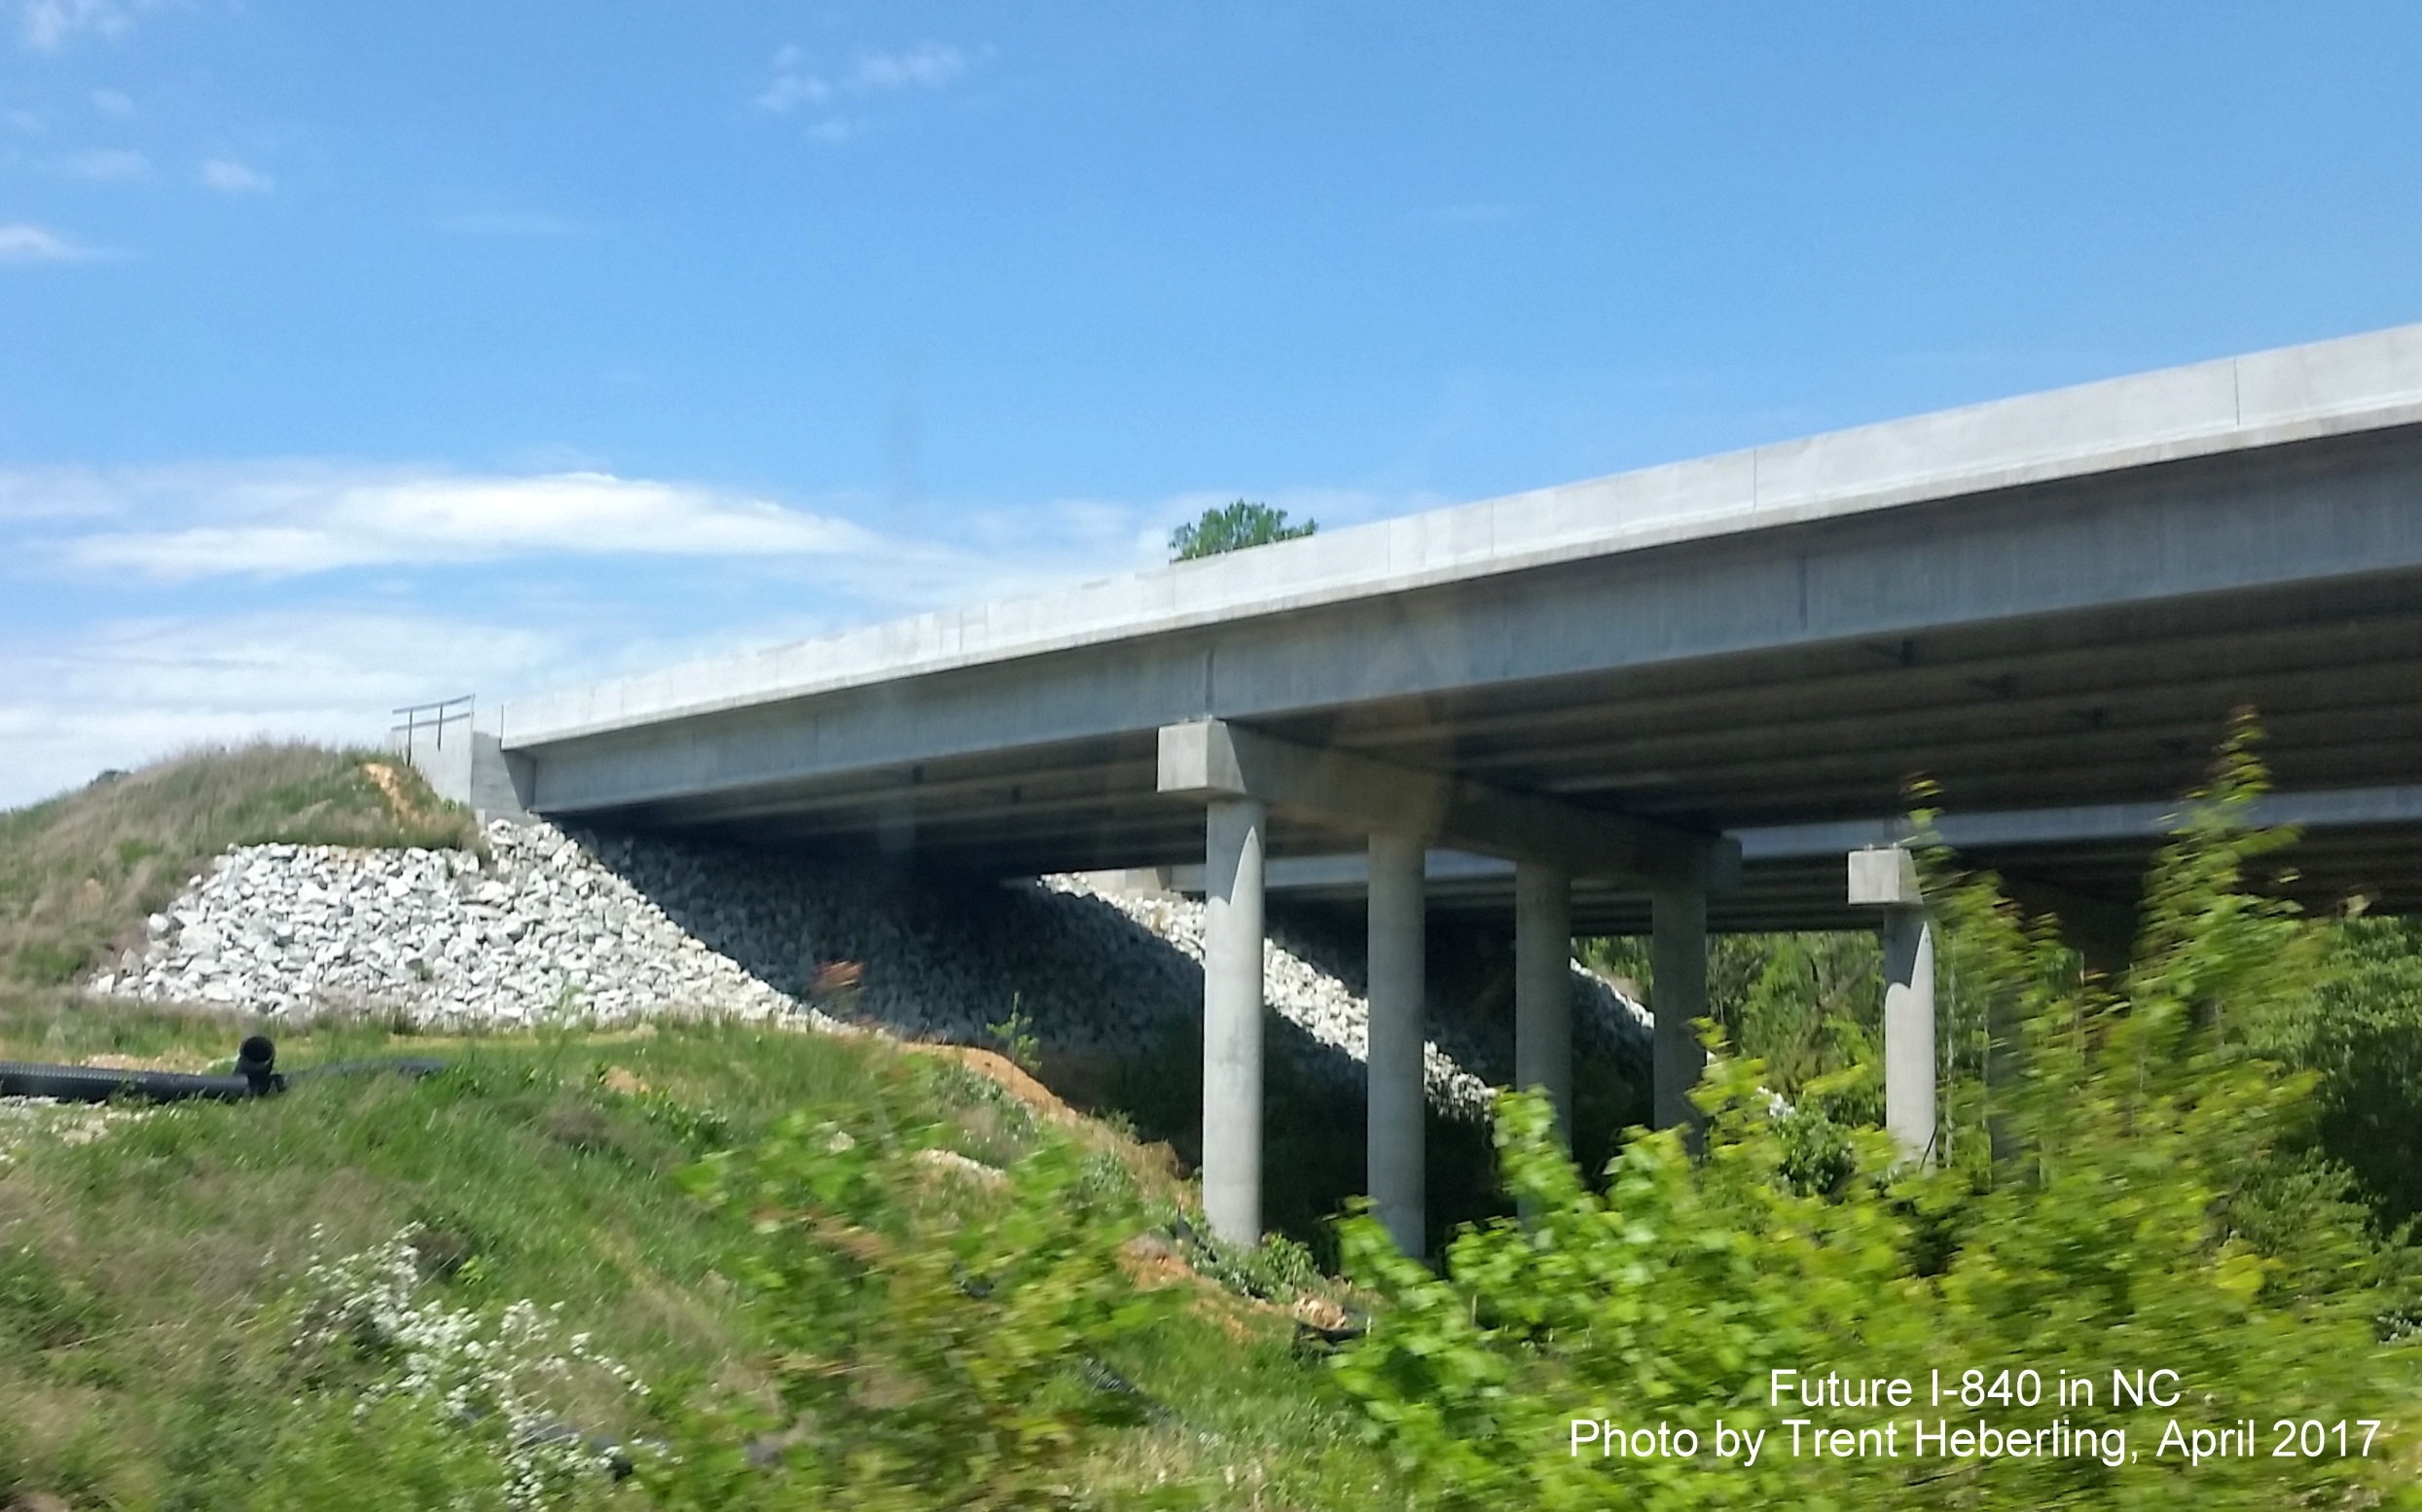 Image taken of future I-840 Greensboro Loop bridge from Drawbridge Rd in Greensboro, from Trent Heberling